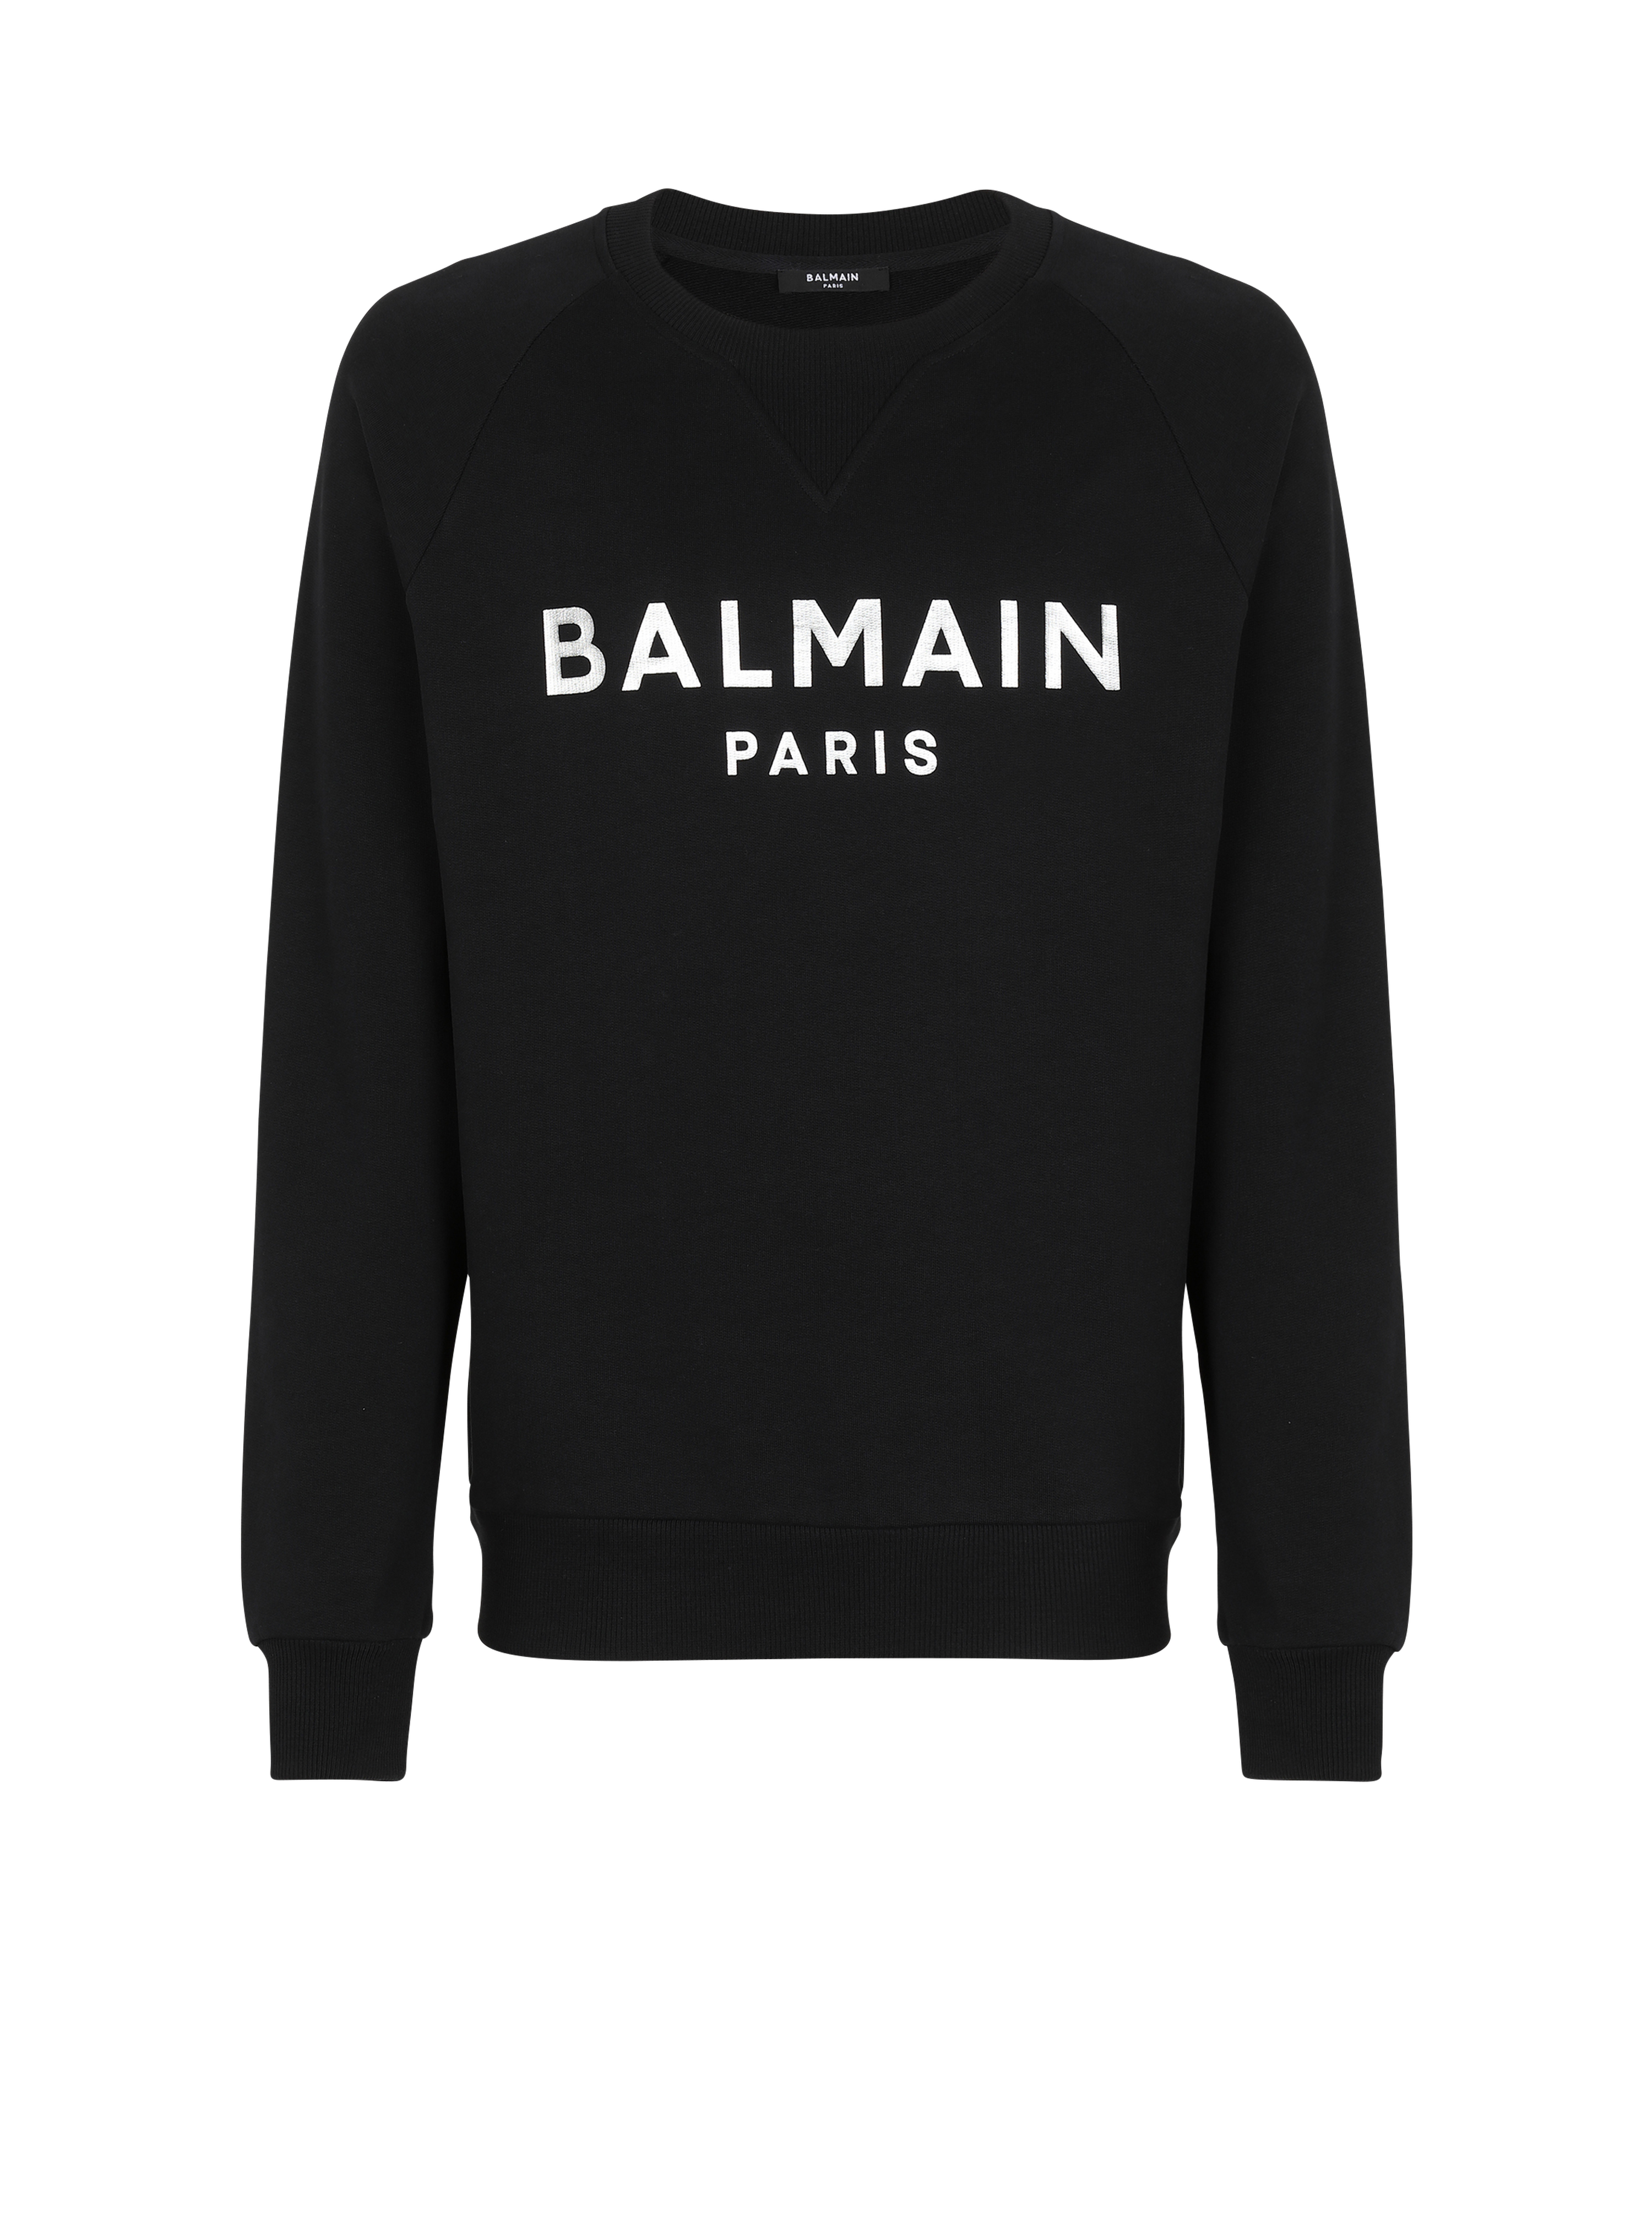 Eco-designed cotton sweatshirt with Balmain Paris metallic logo print, black